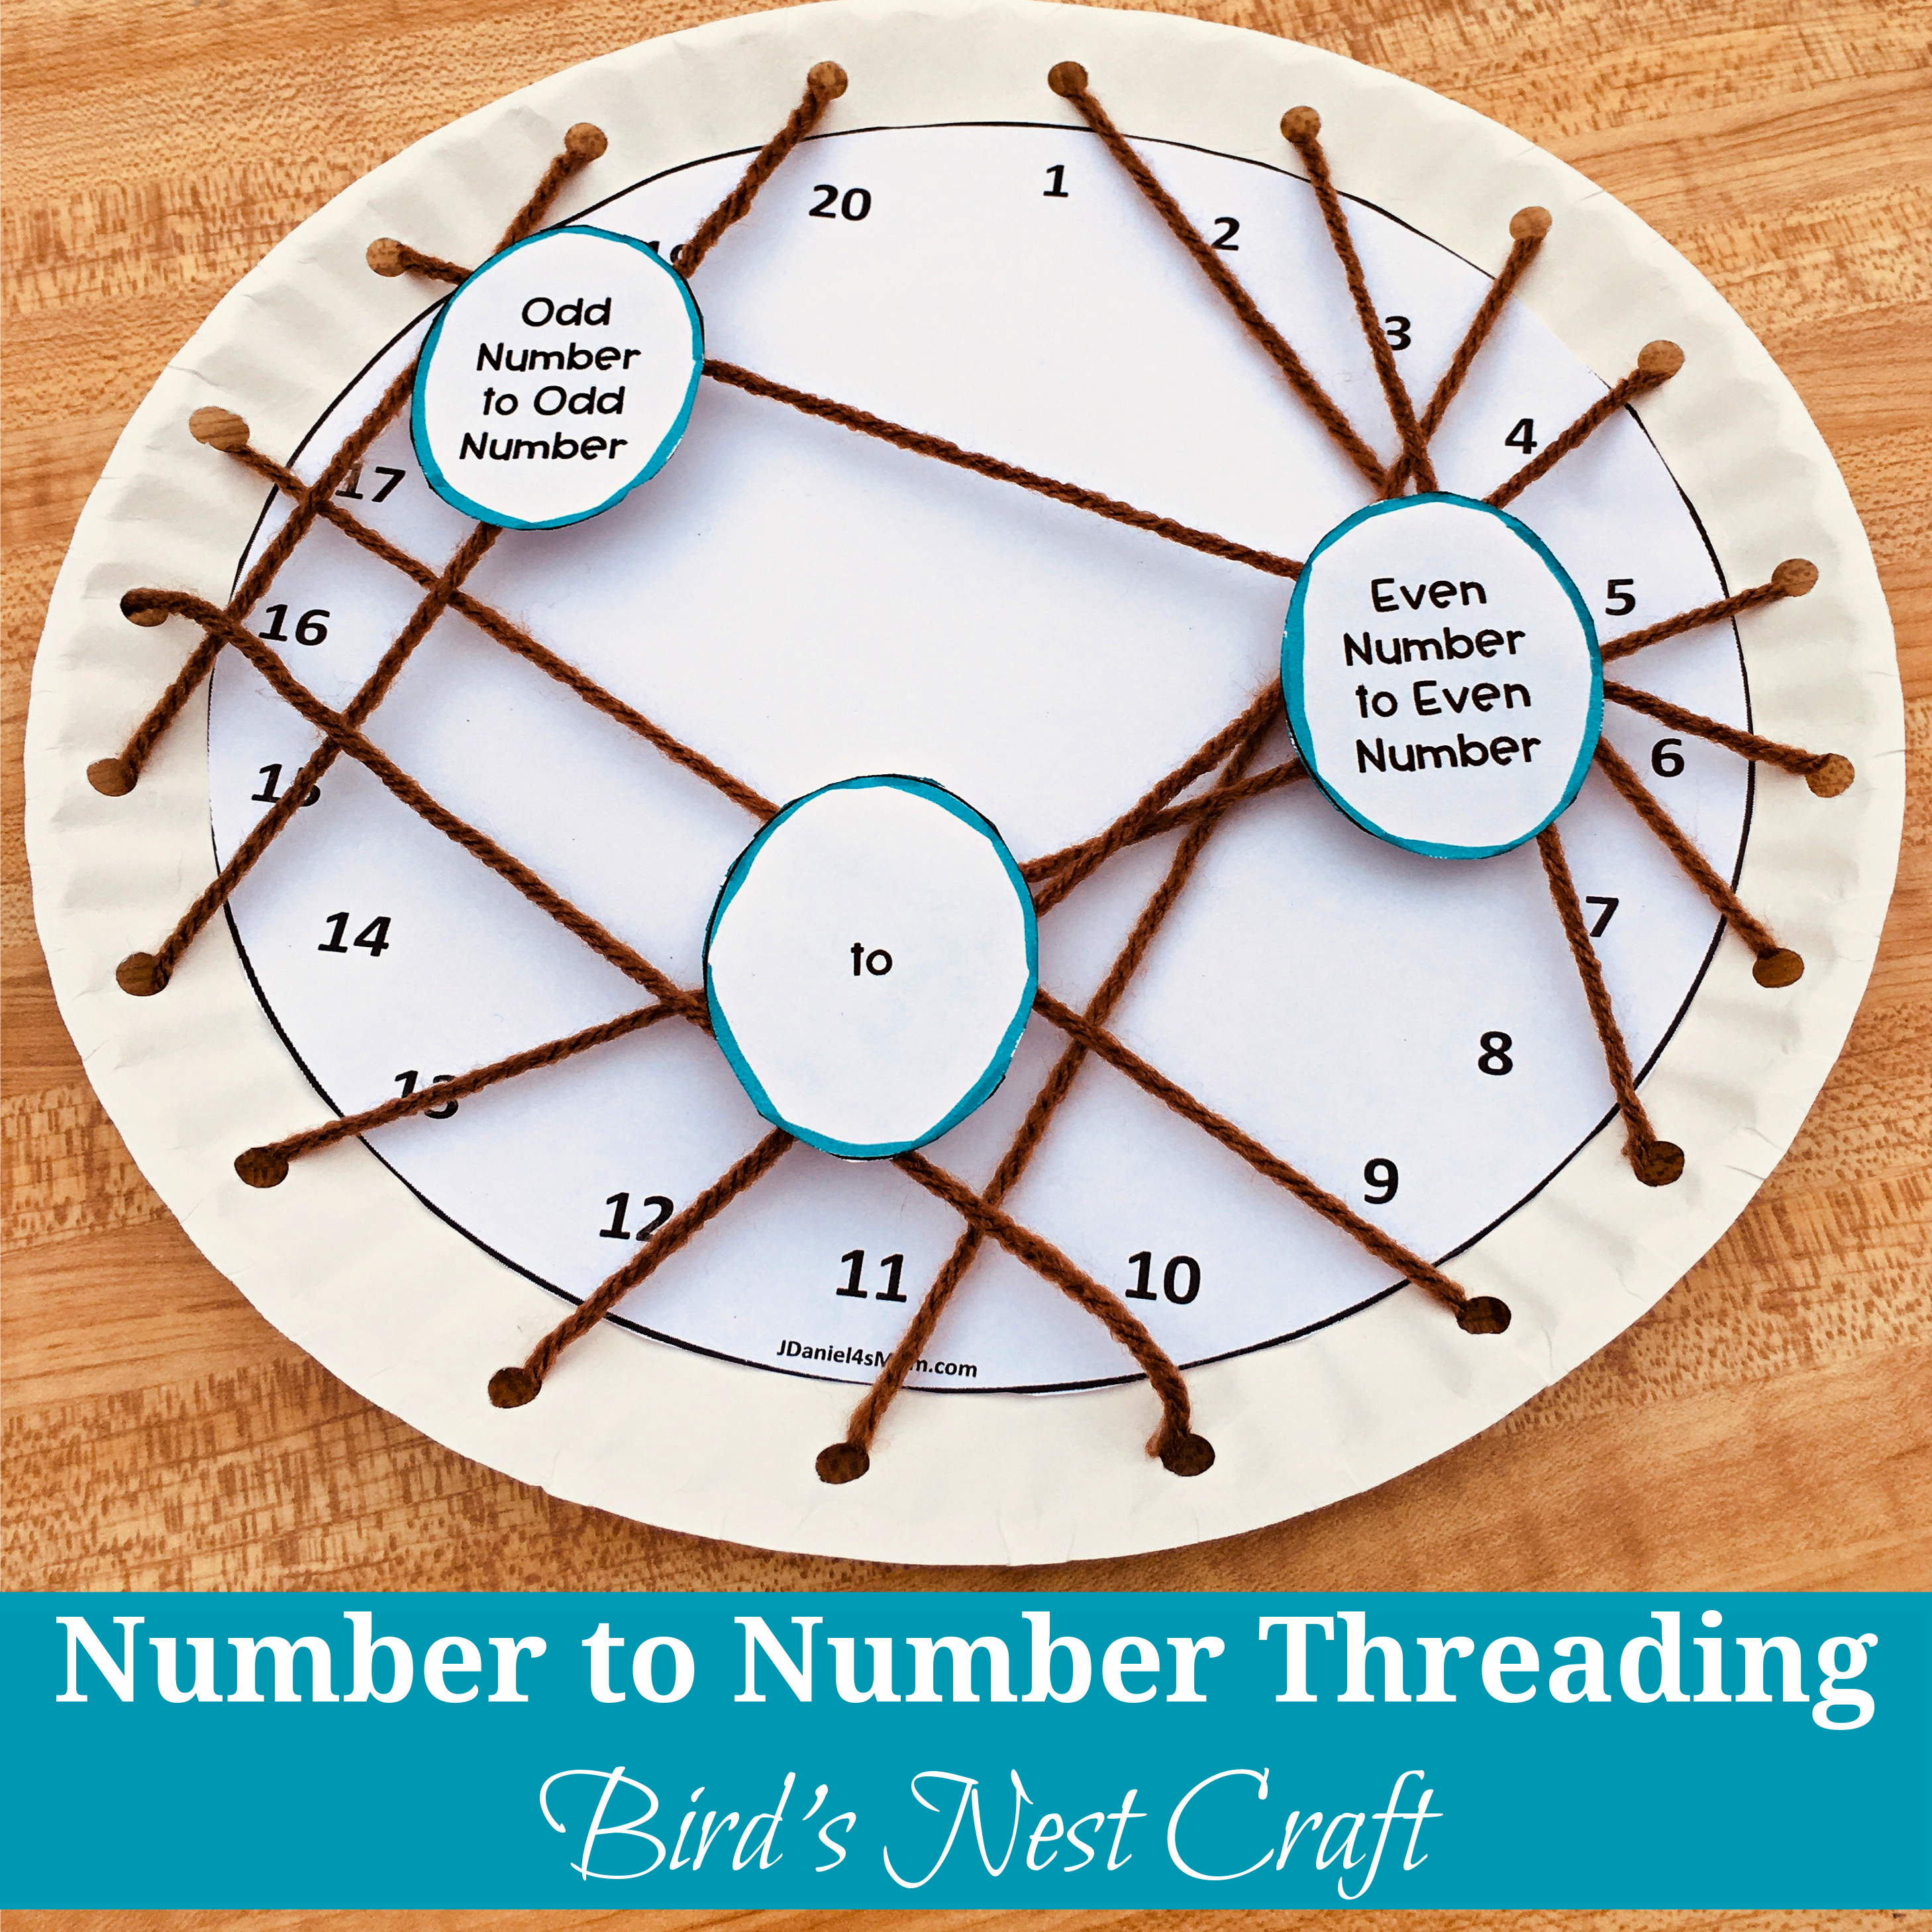 Number to Number Threading Bird Nest Craft 